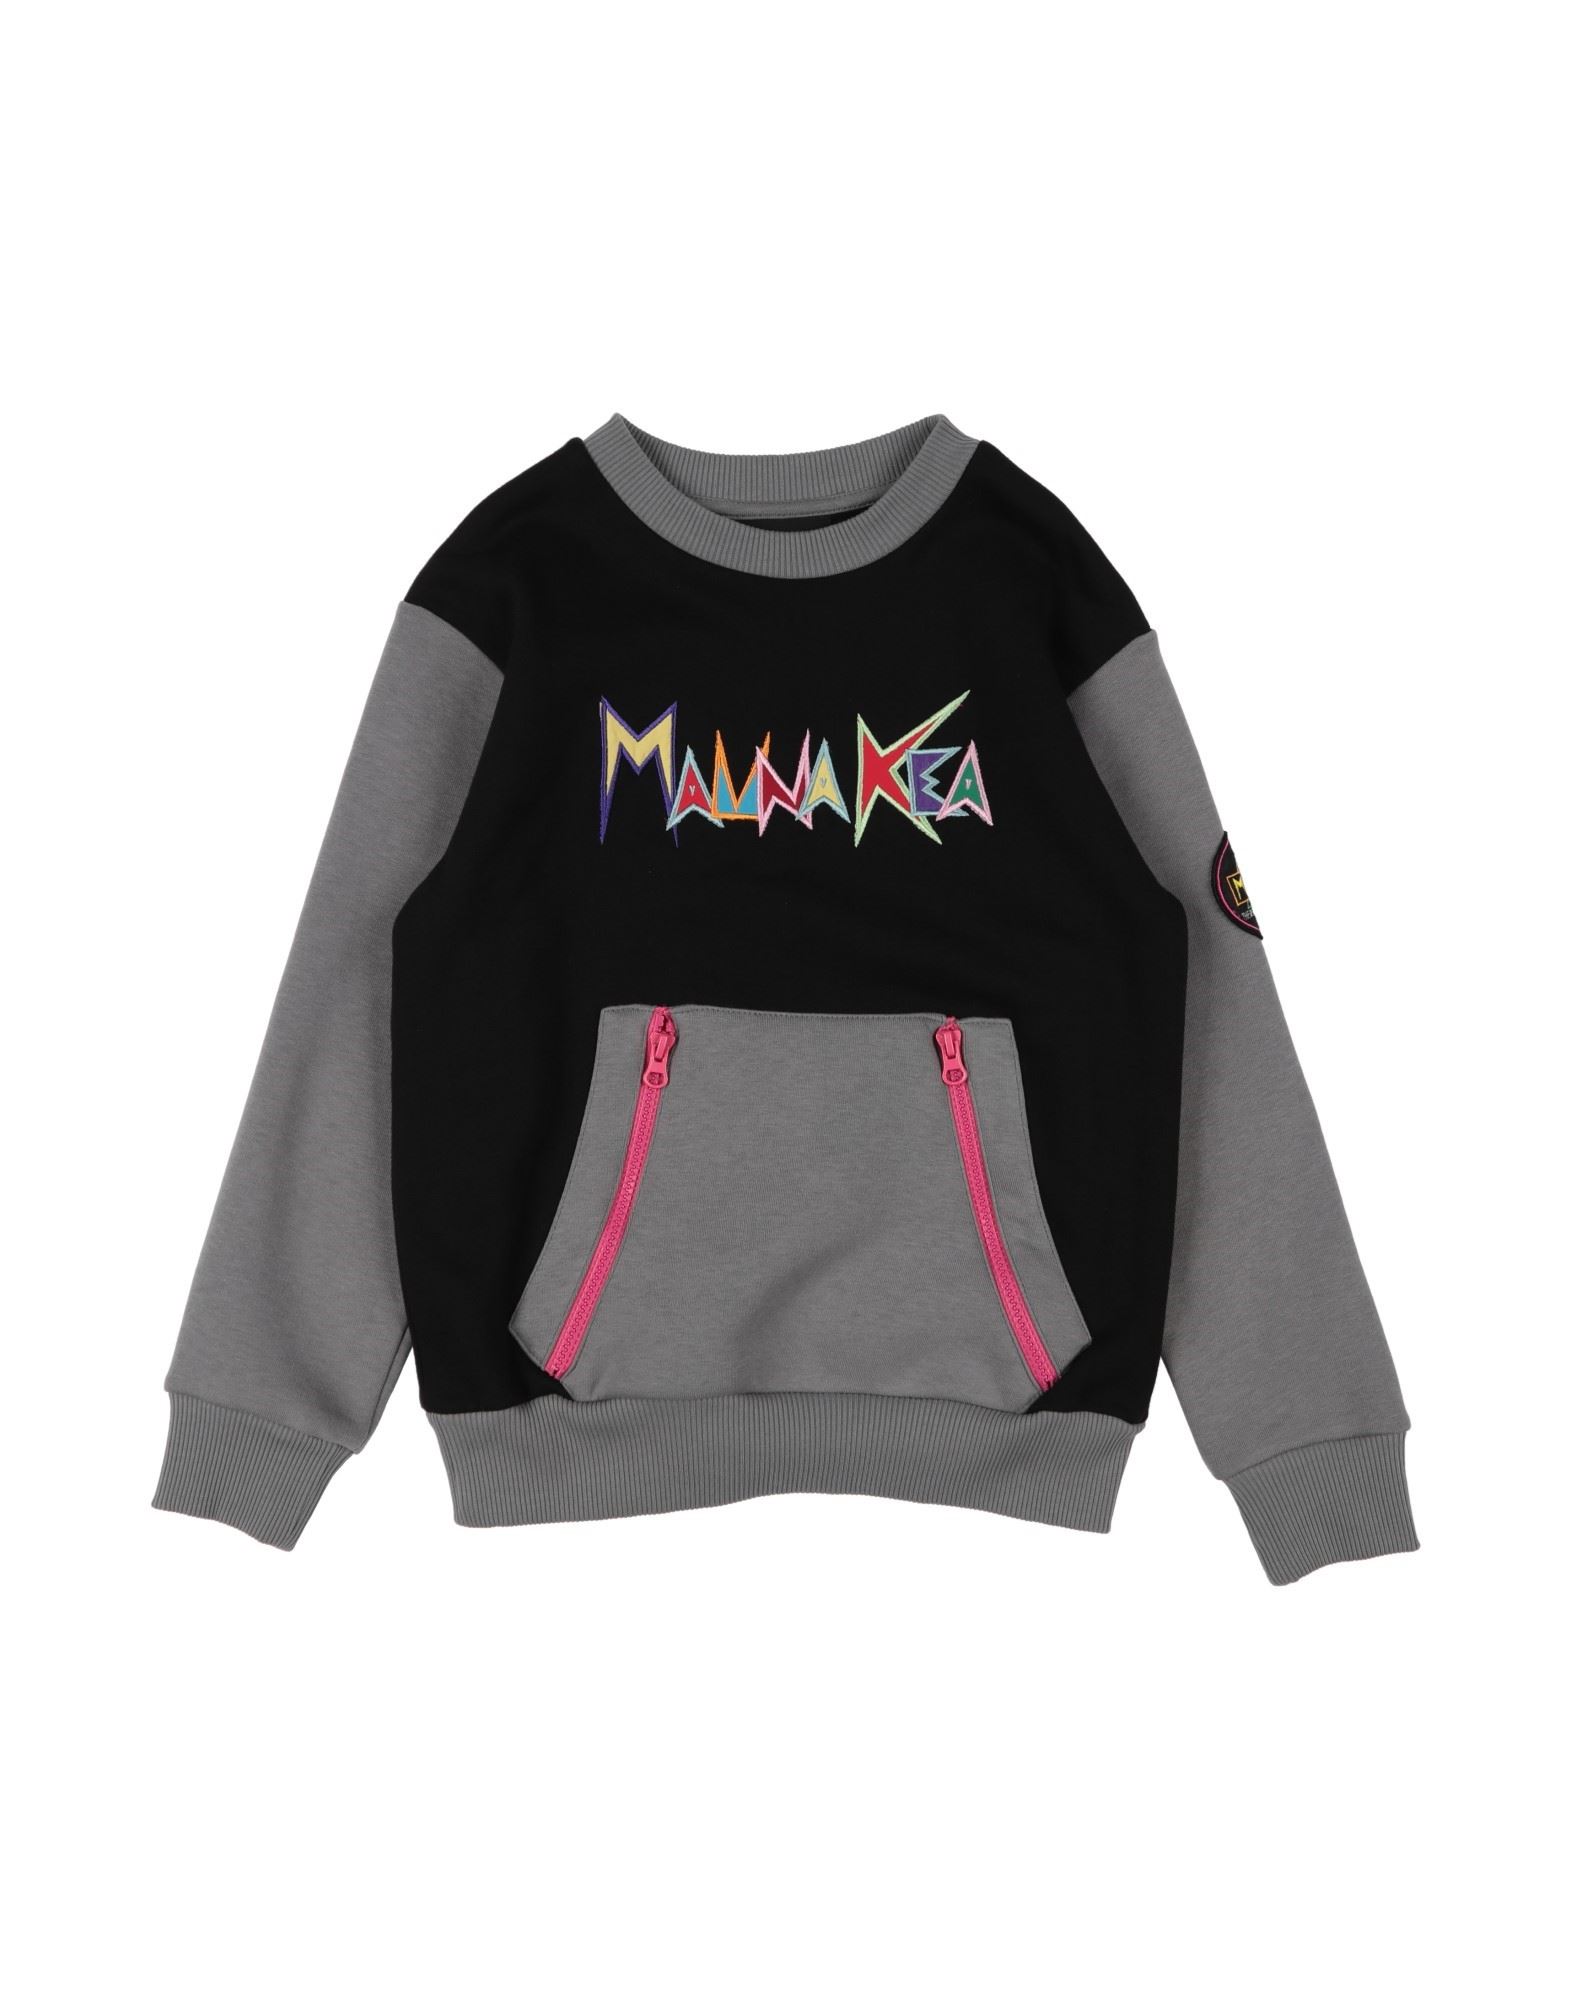 MAUNA KEA Sweatshirt Kinder Schwarz von MAUNA KEA